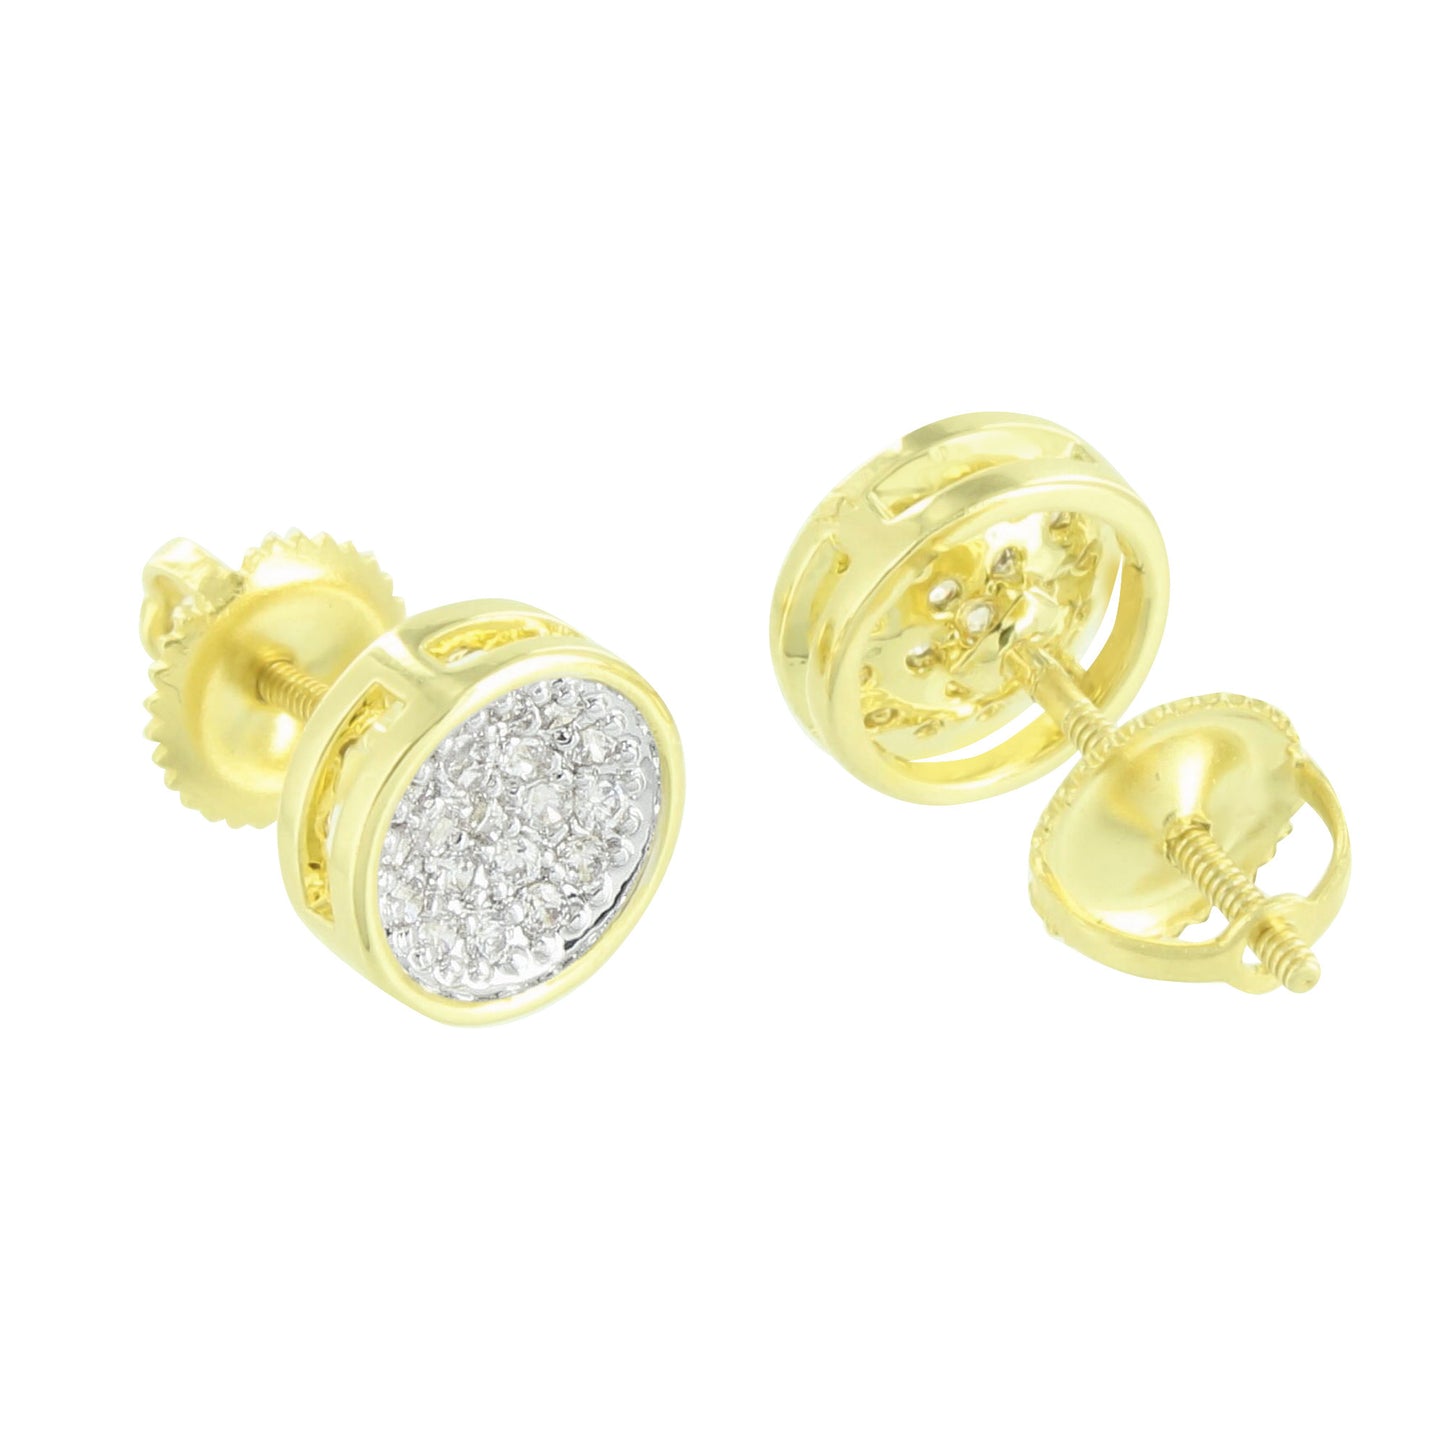 Gold Finish Earrings Round Stylish Simulated Diamonds Cluster Set